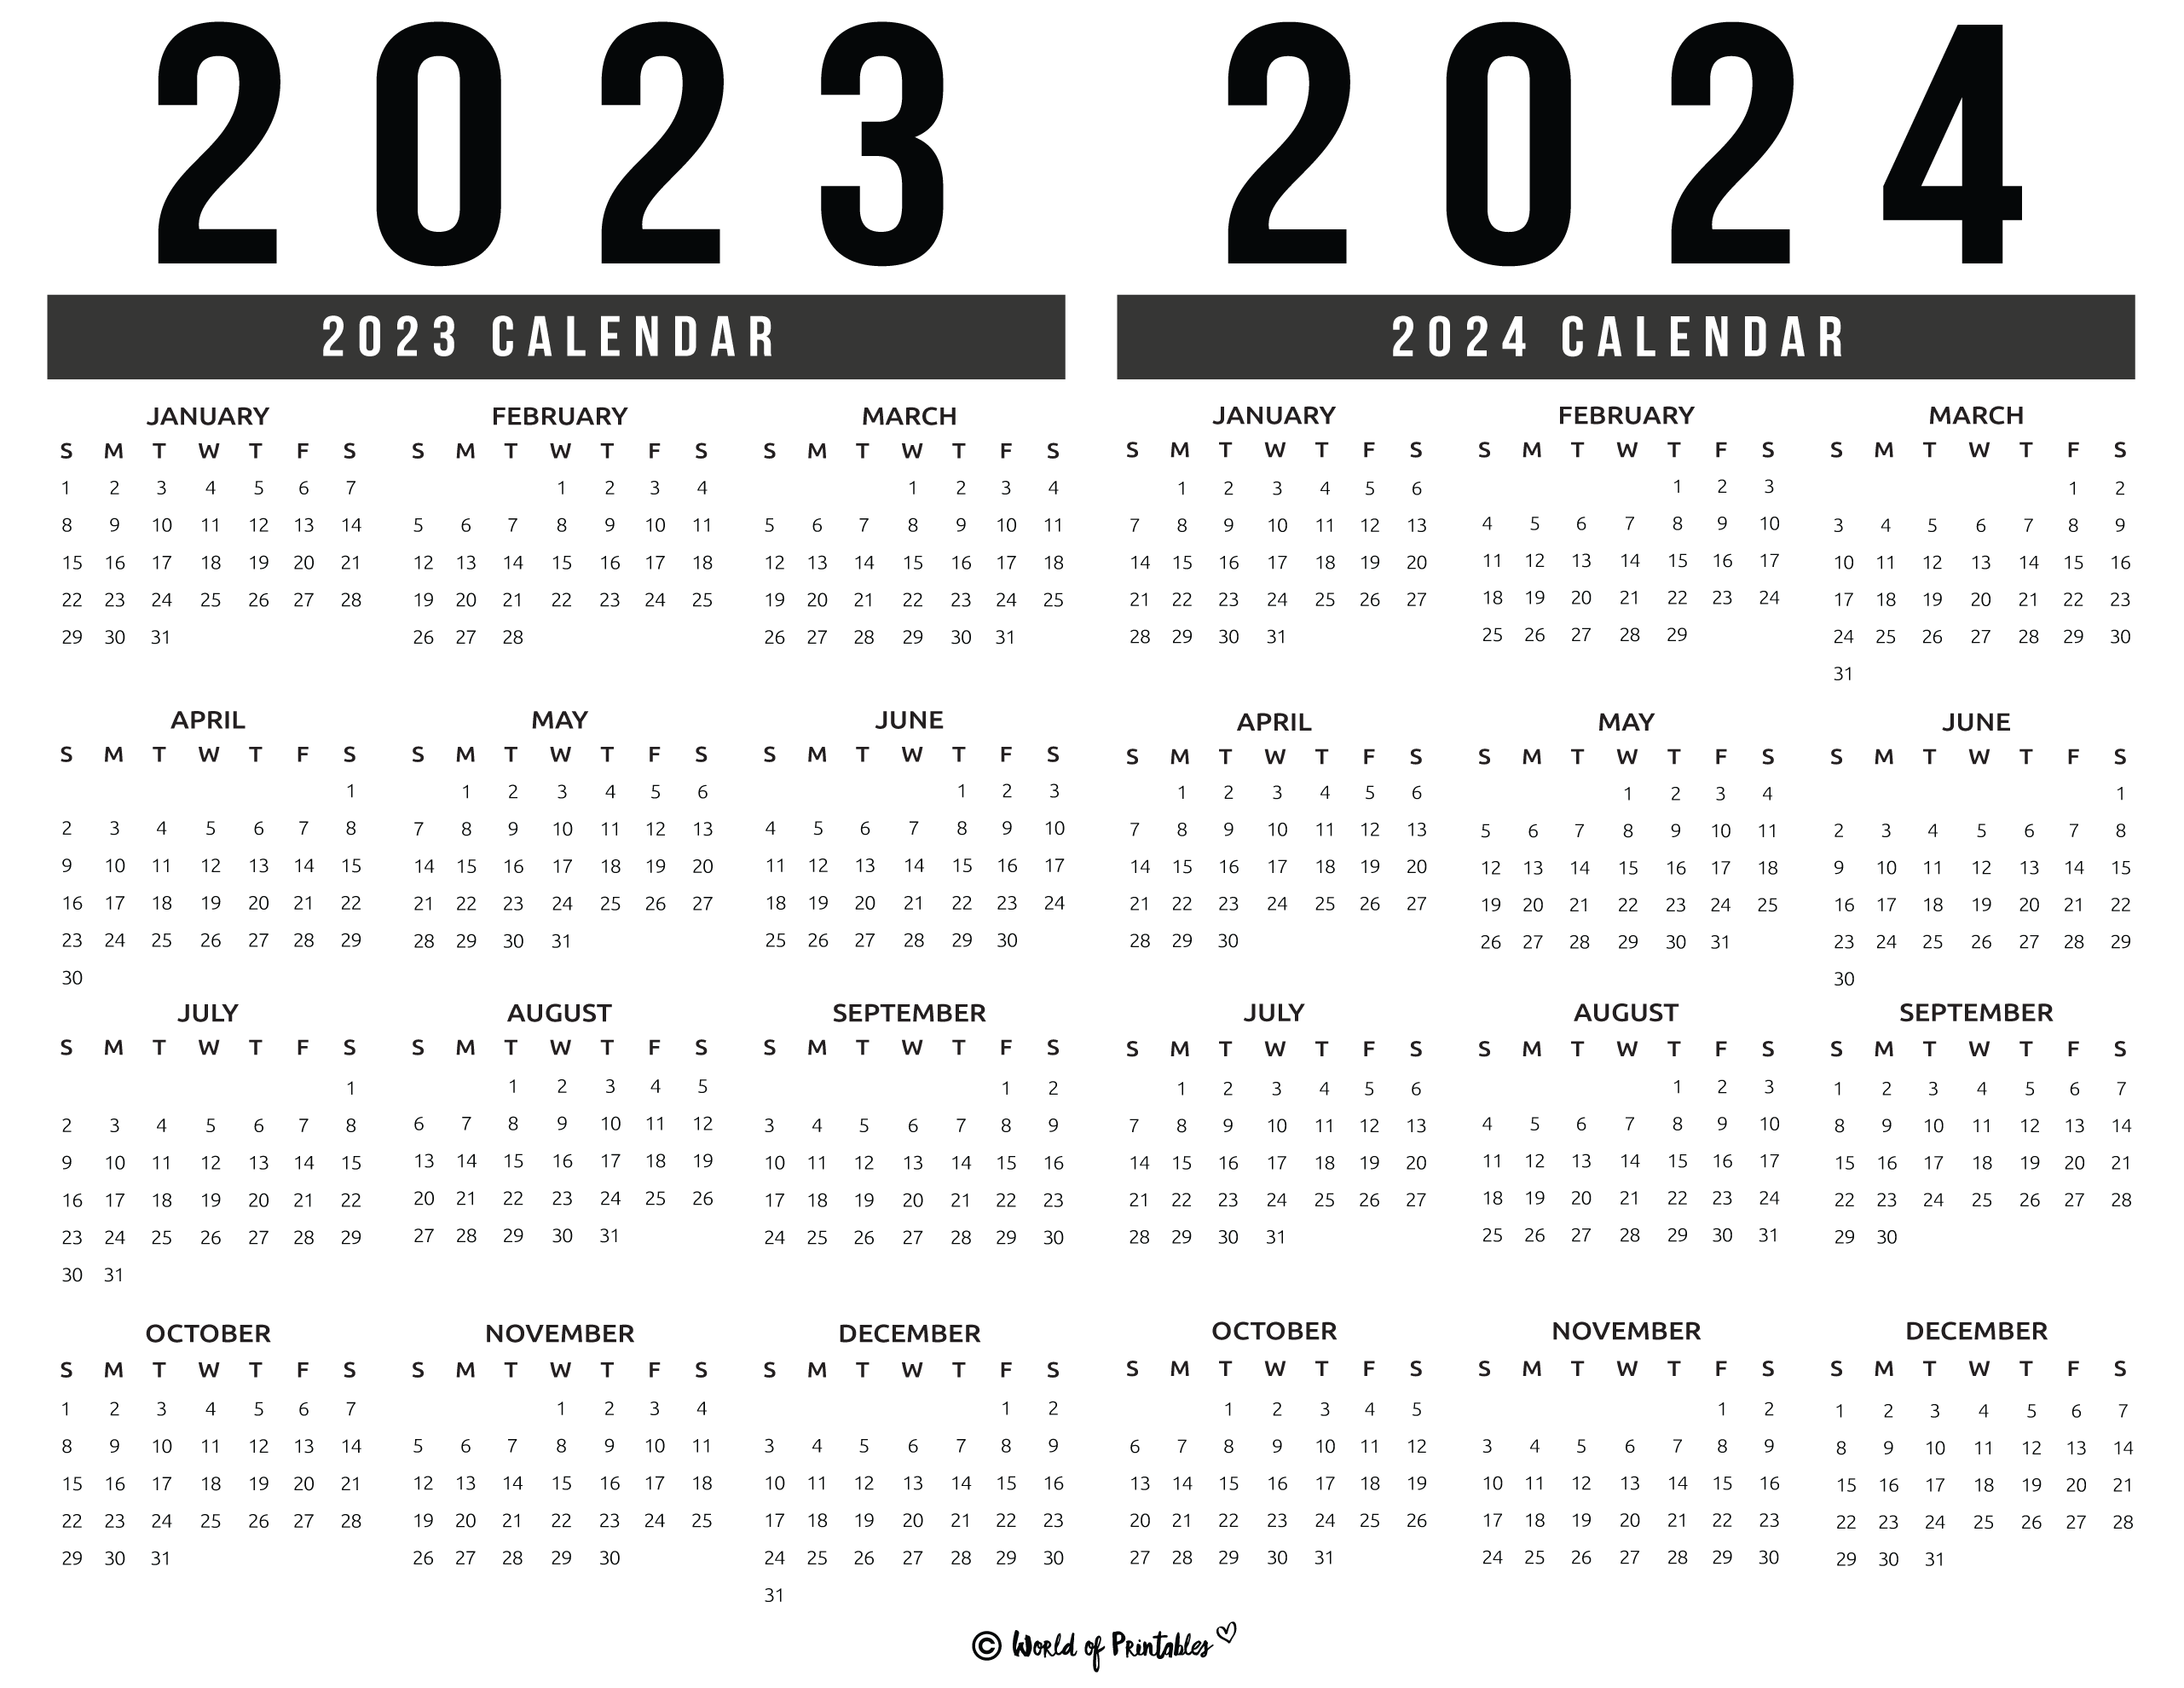 2023 2024 Calendar Free Printables - World Of Printables for Printable Calendar 2023 And 2024